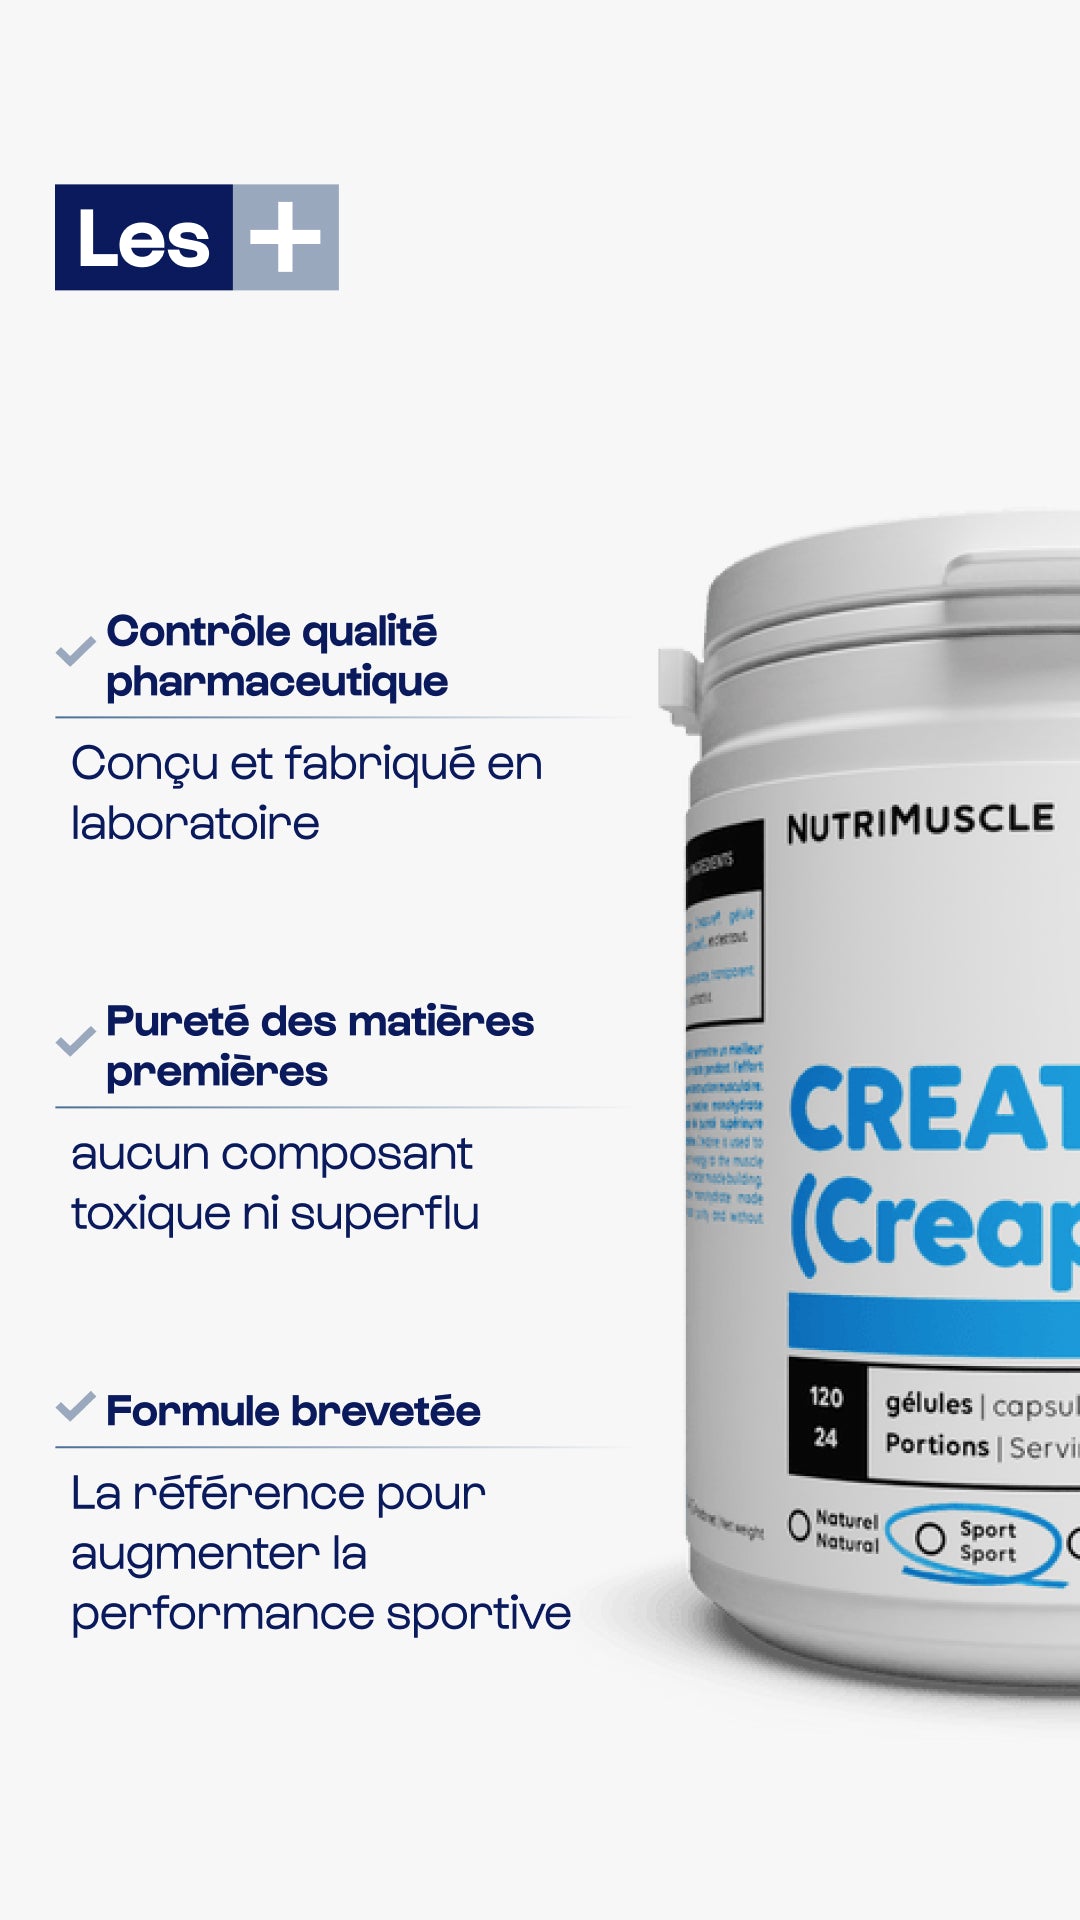 Creatine (Creapure®) in powder